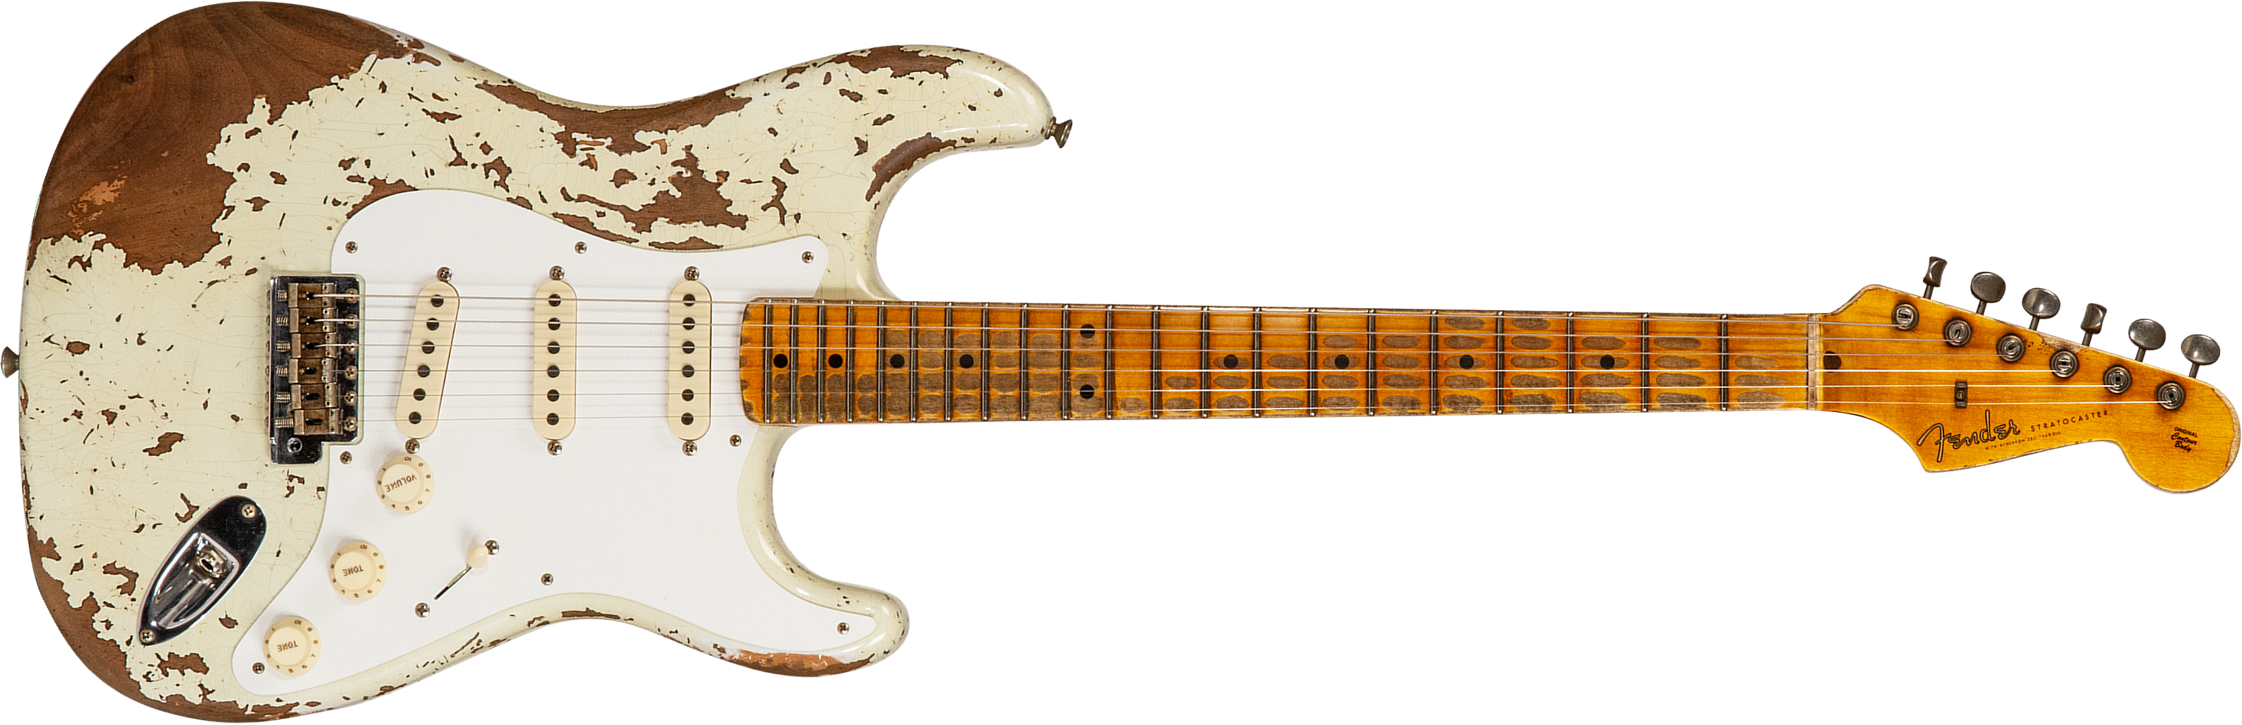 Fender Custom Shop Strat 1956 3s Trem Mn #cz568636 - Super Heavy Relic Aged India Ivory - Guitarra eléctrica con forma de str. - Main picture